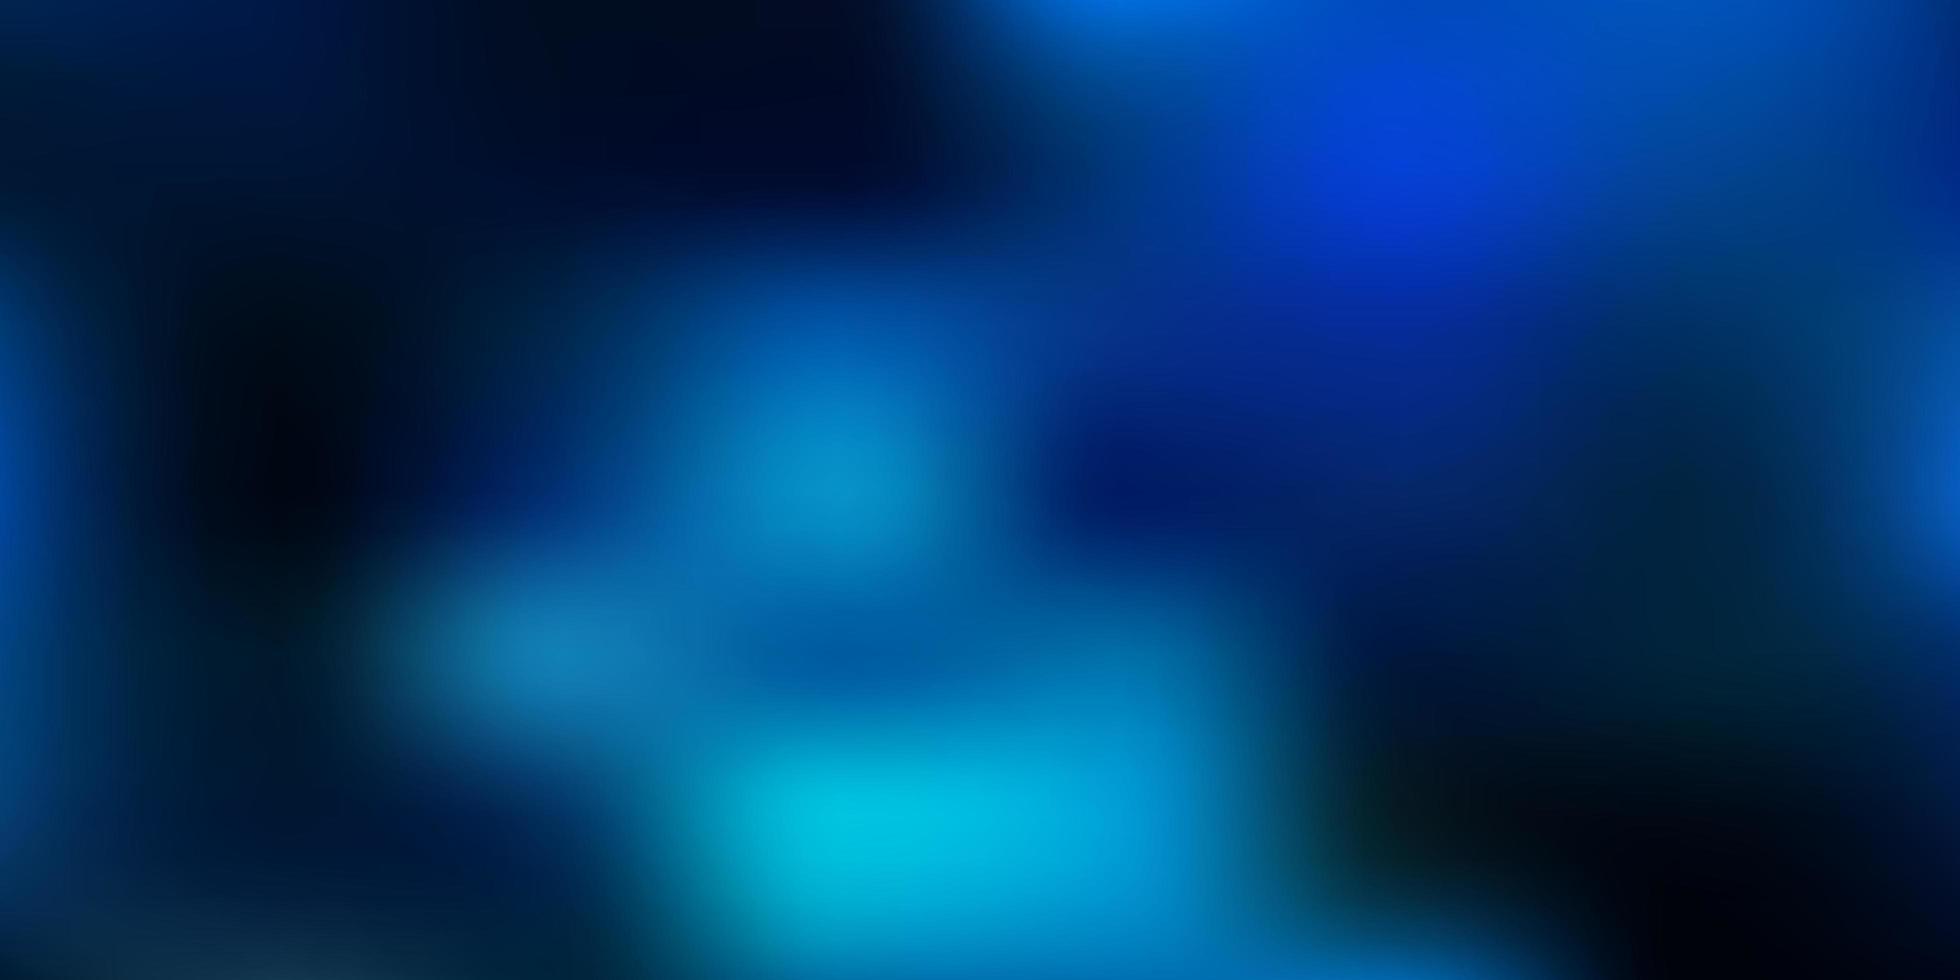 Light blue vector blurred template